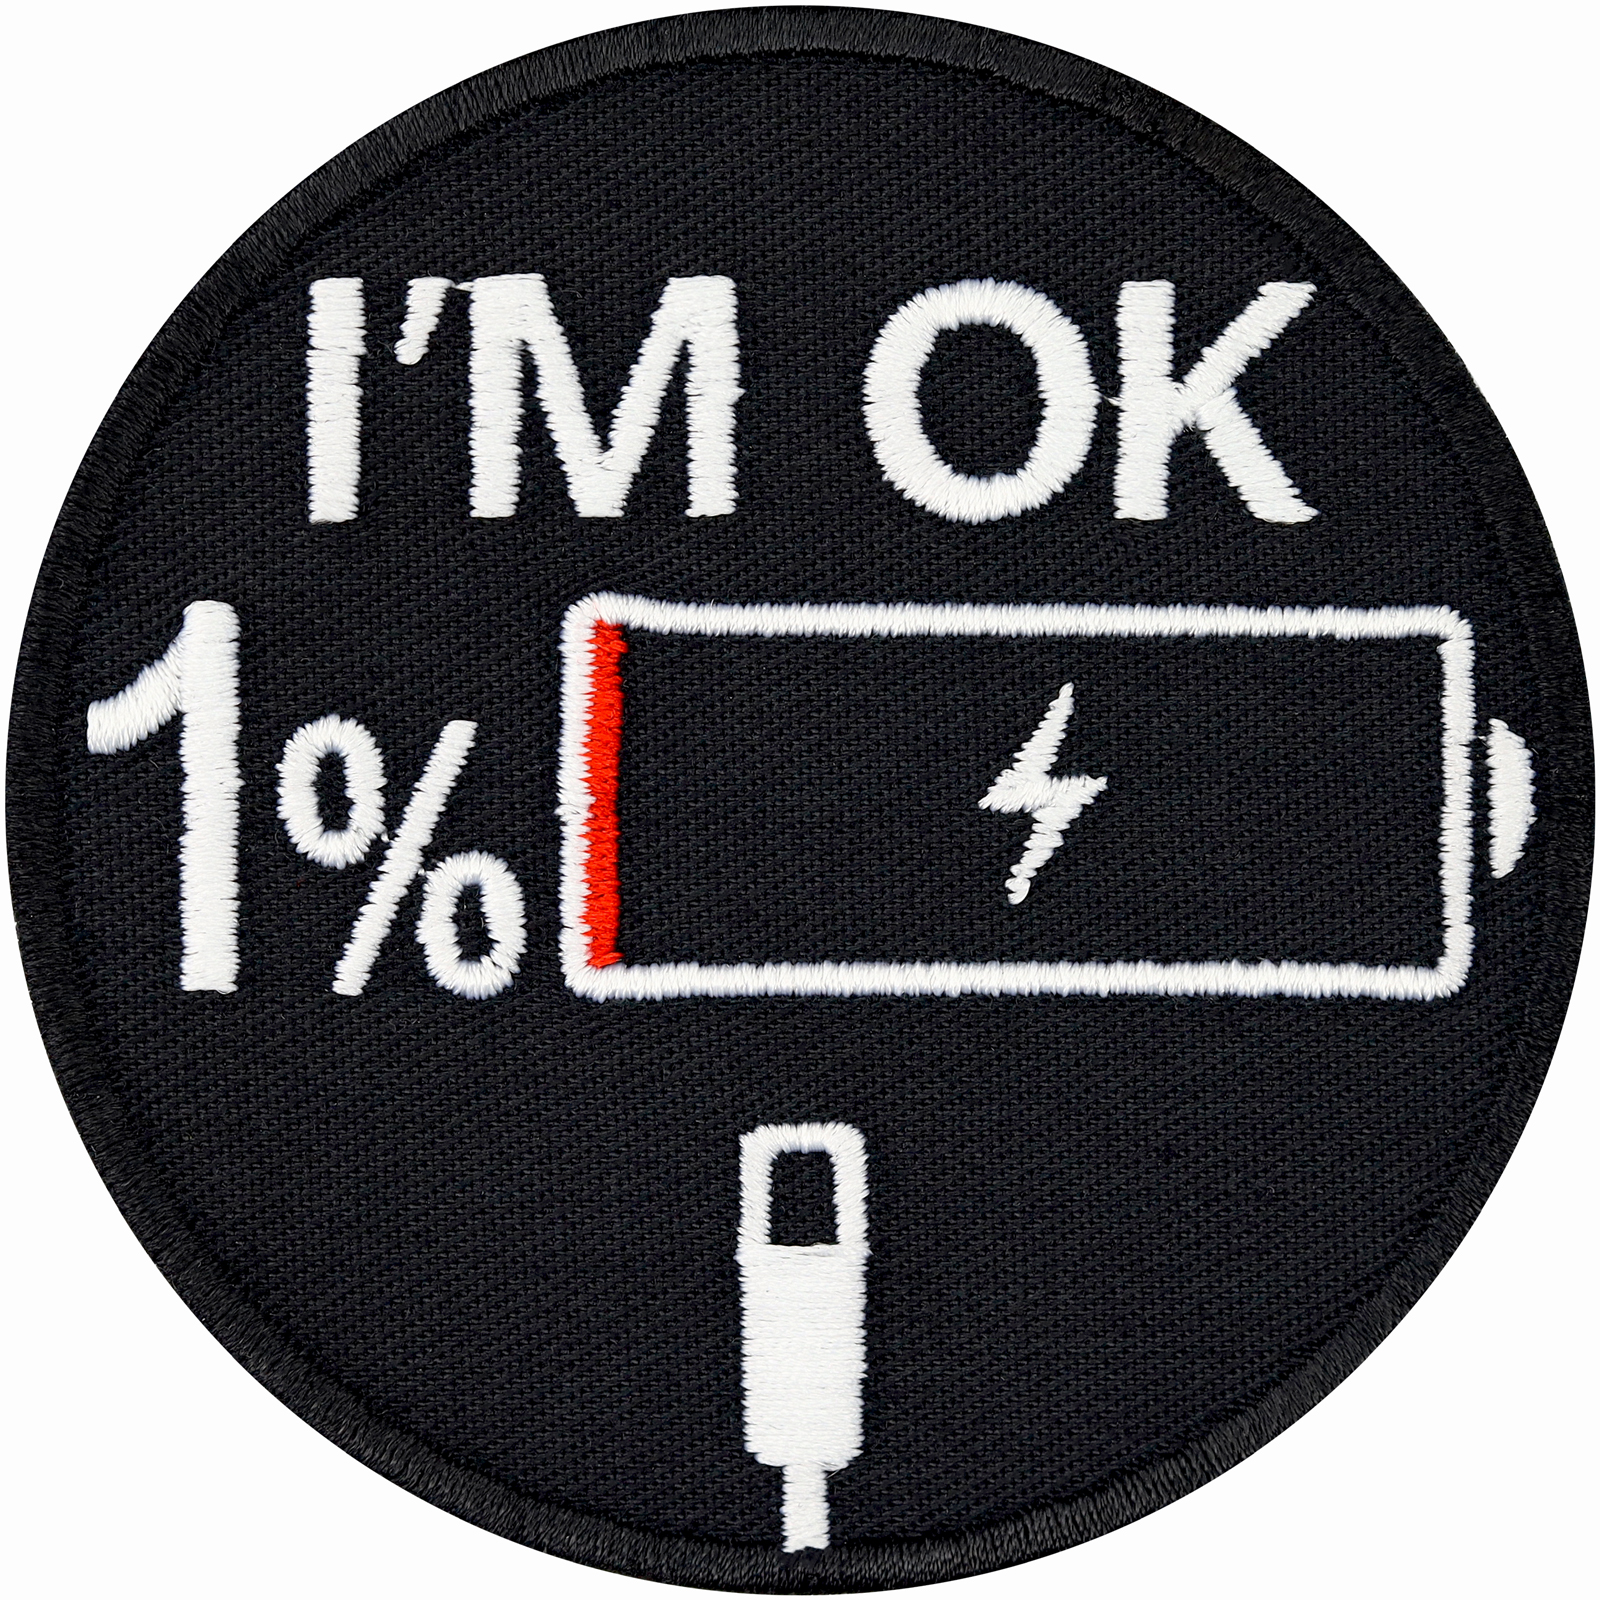 I'm OK 1% Left - Patch